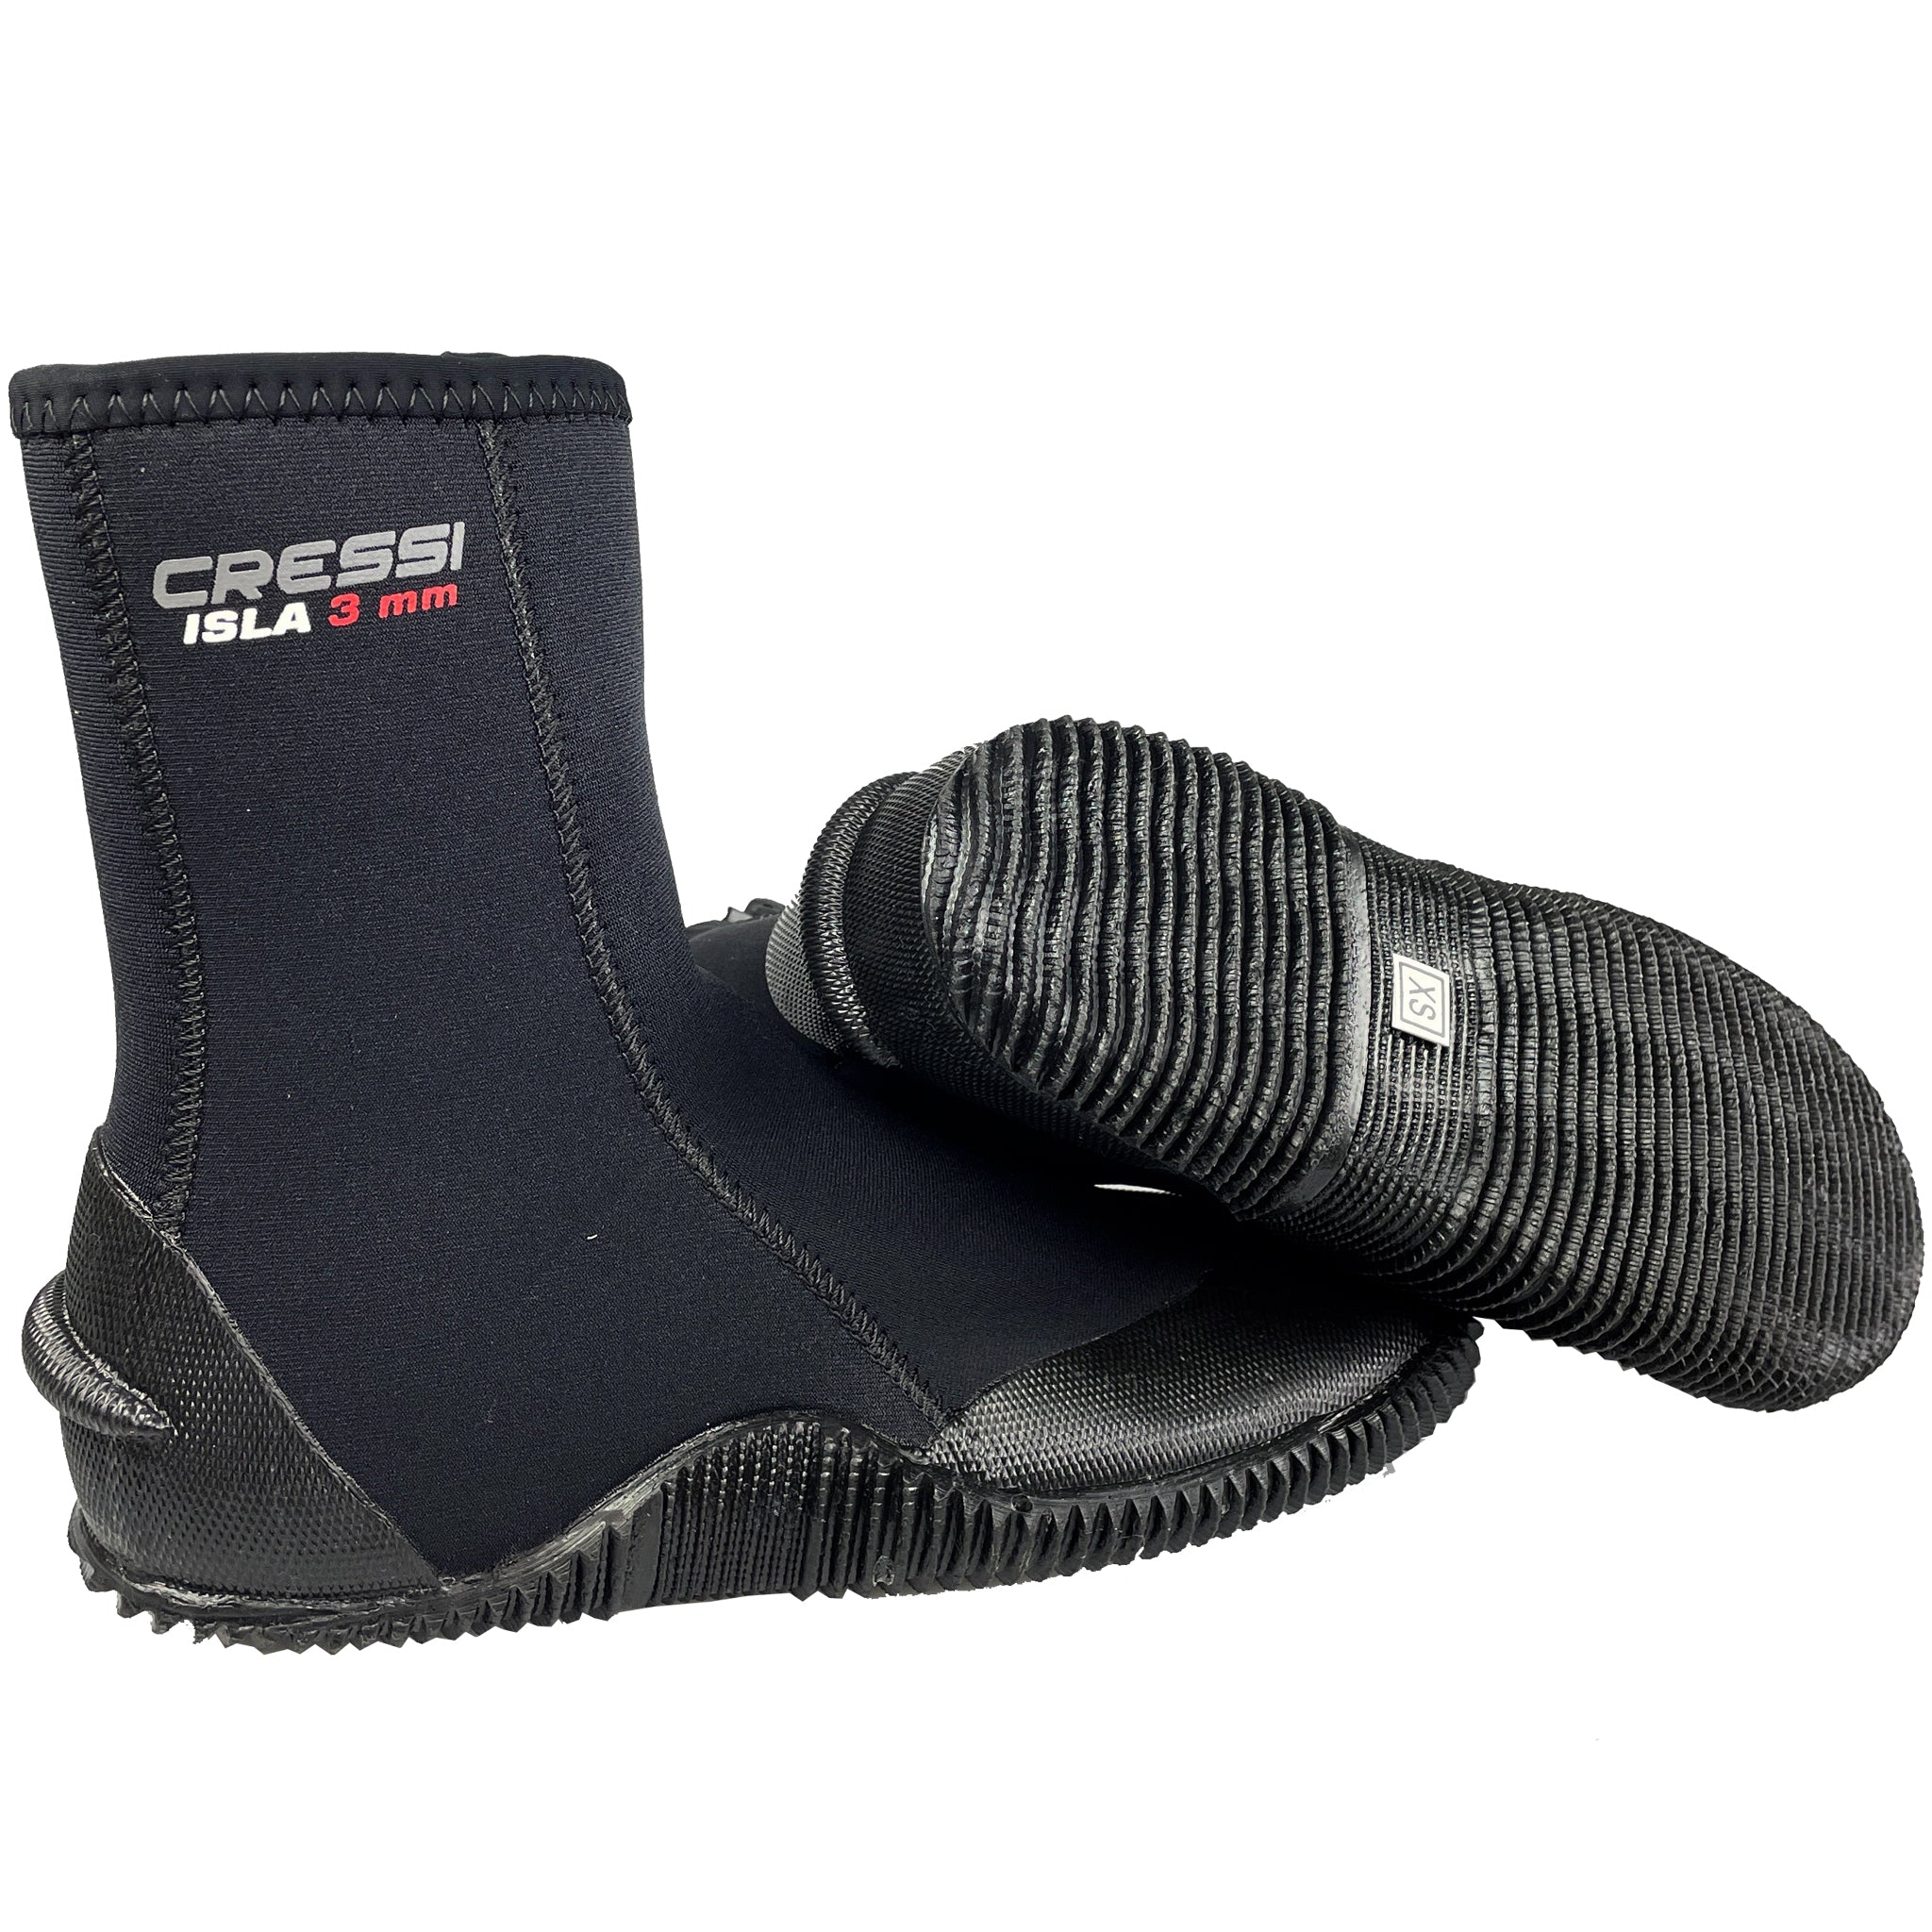 Cressi Isla 3mm Zipped Boot | Pair